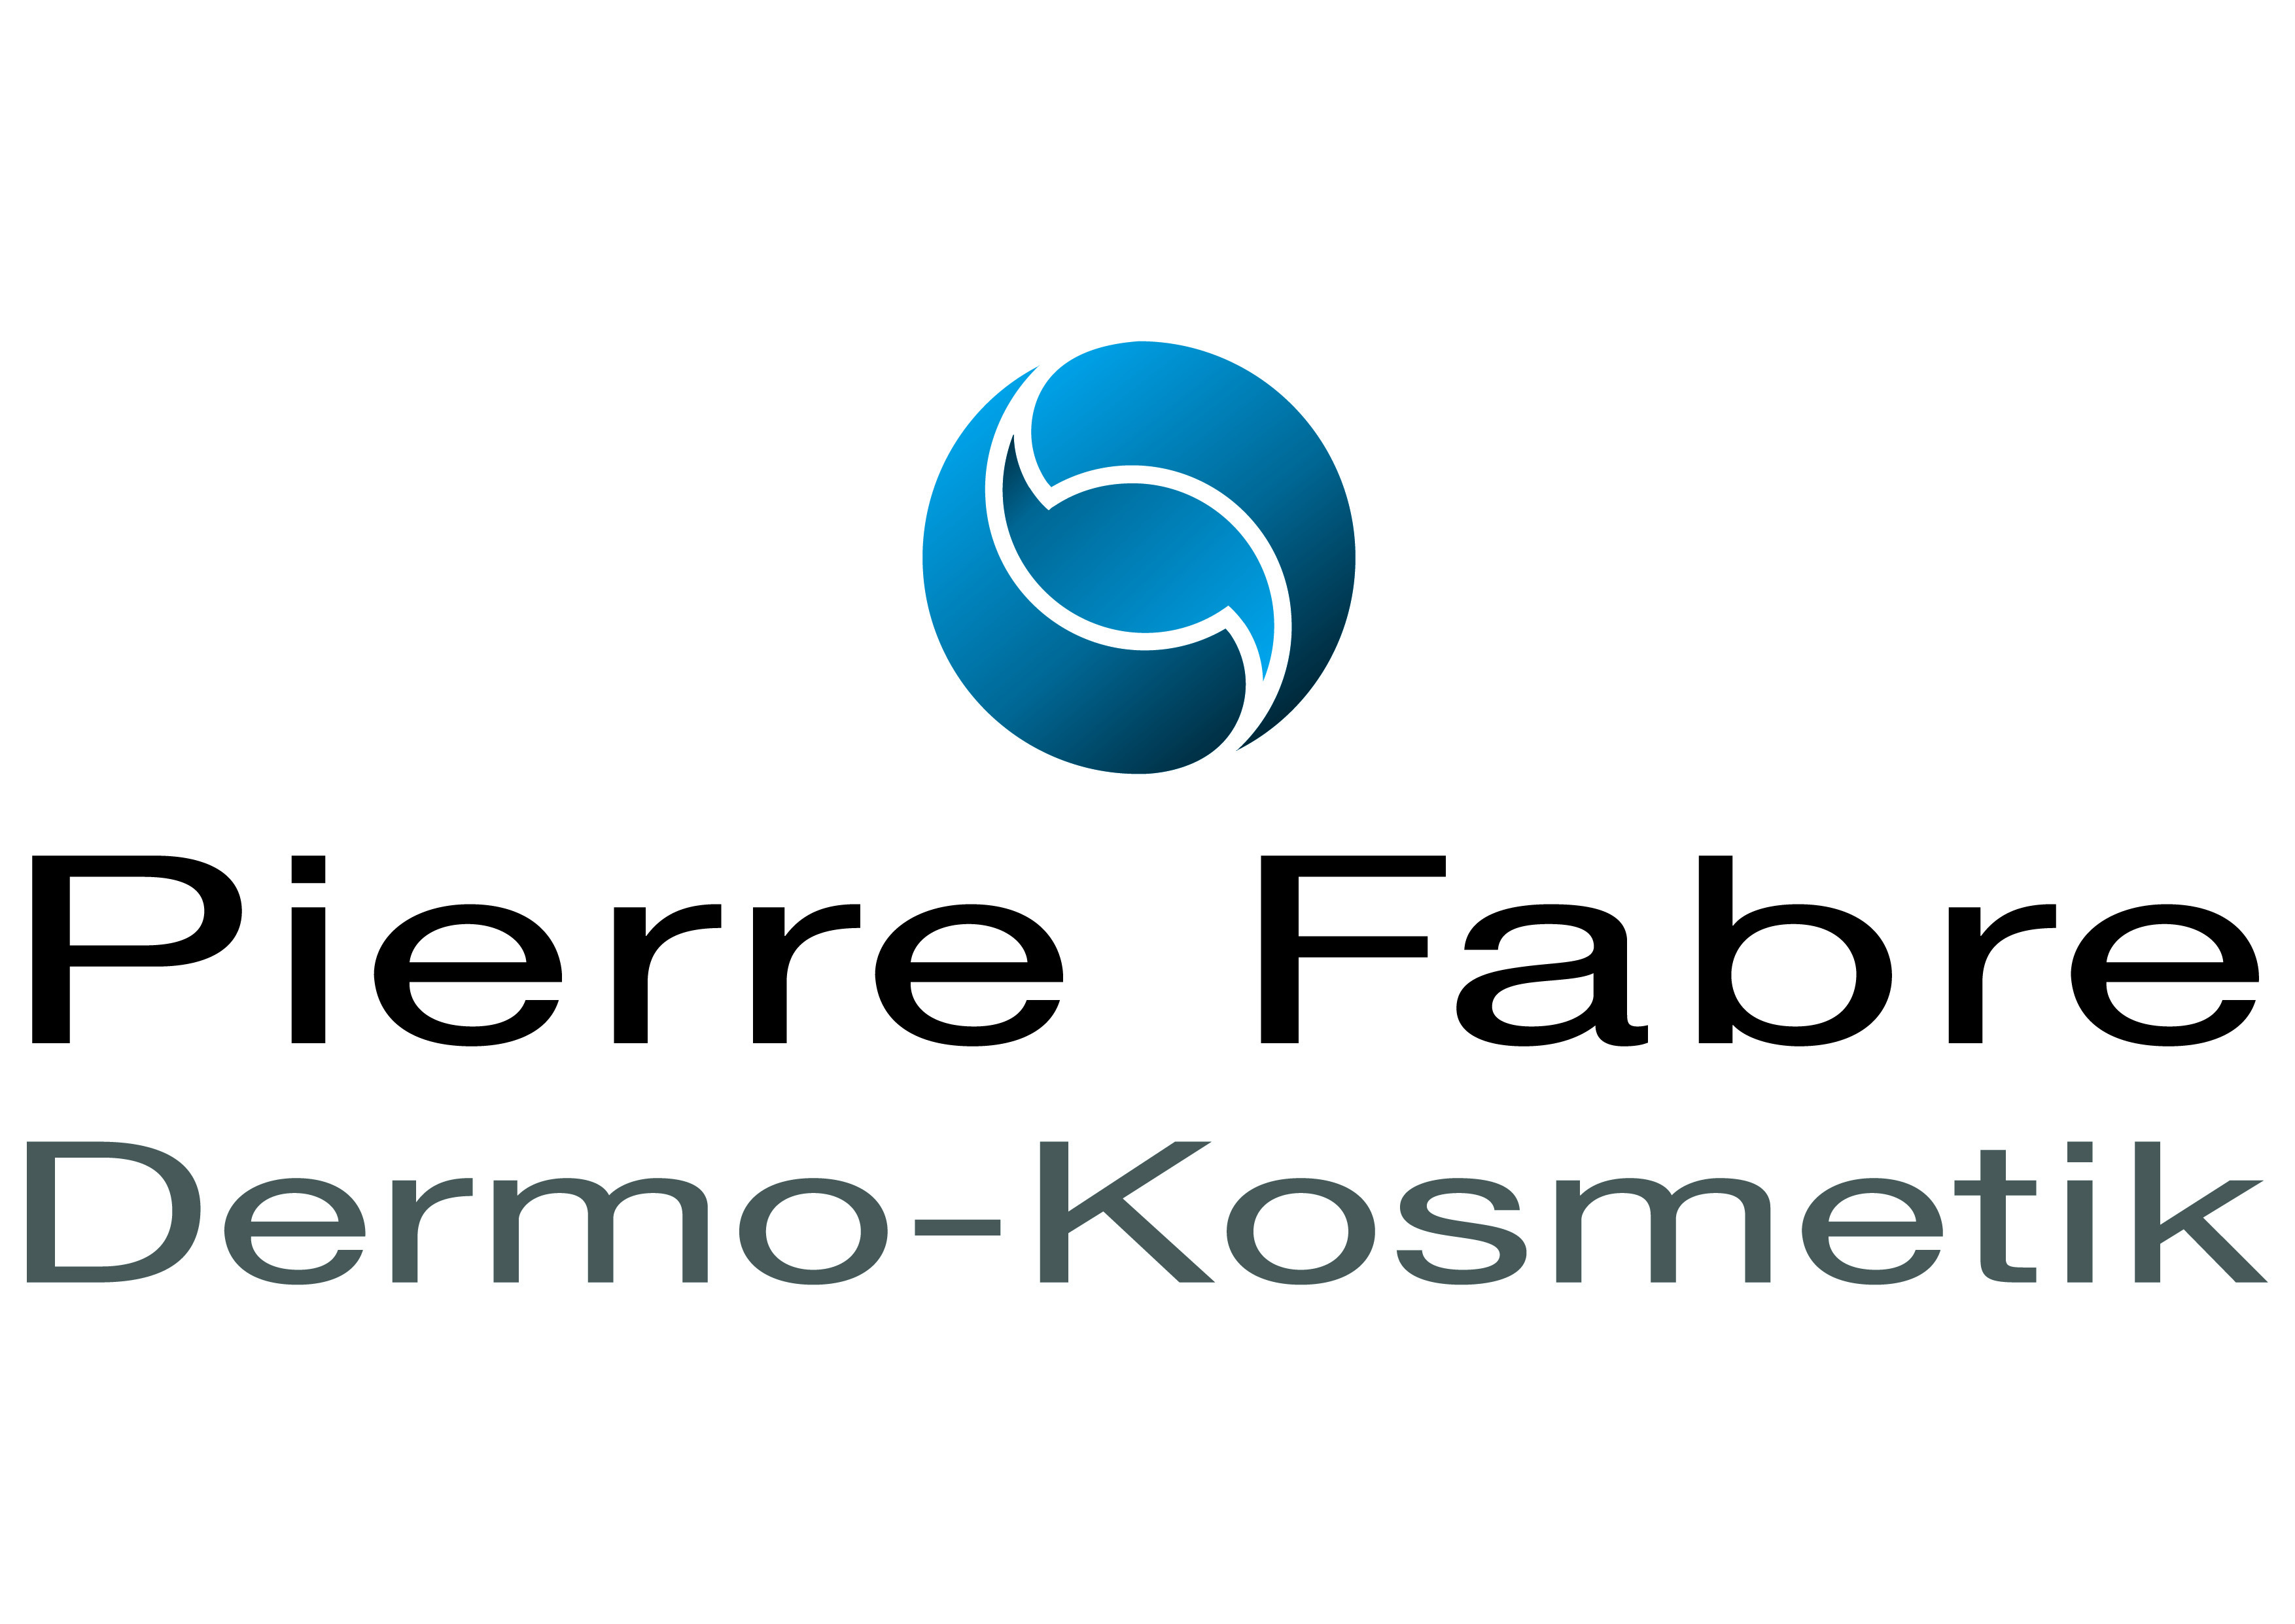 Pierre Fabre Dermo-Kosmetik